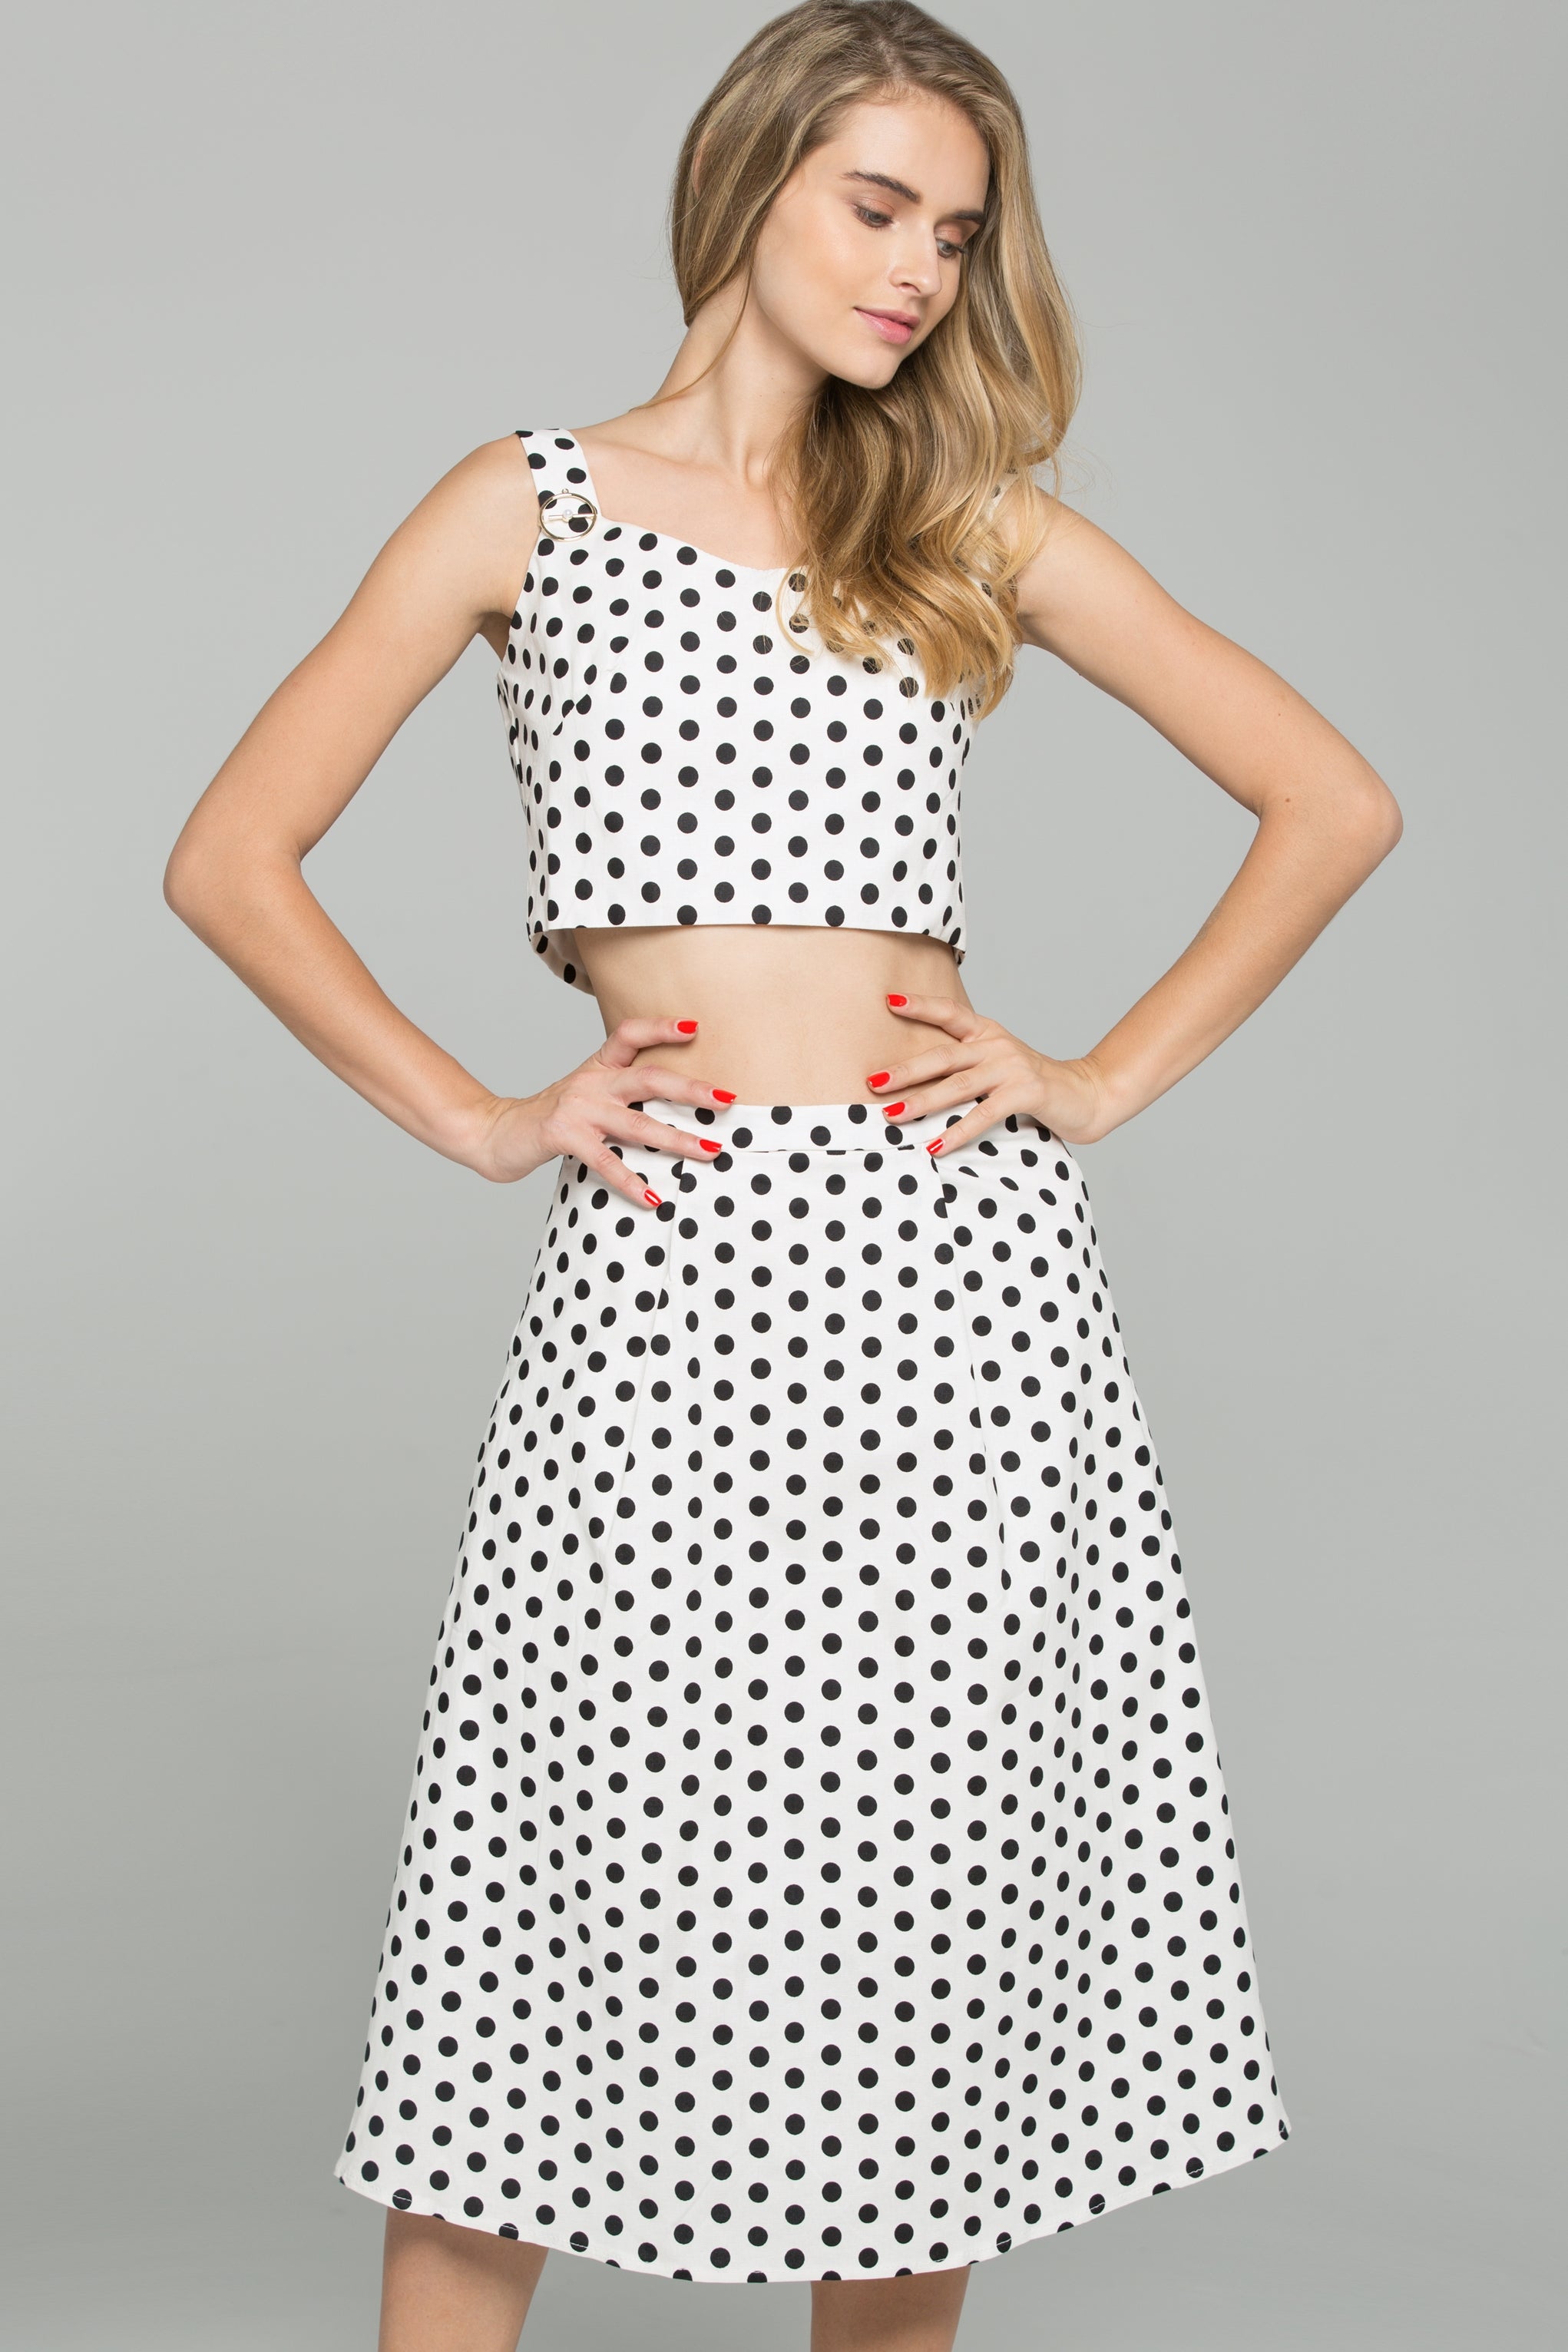 black and white polka dot dresses